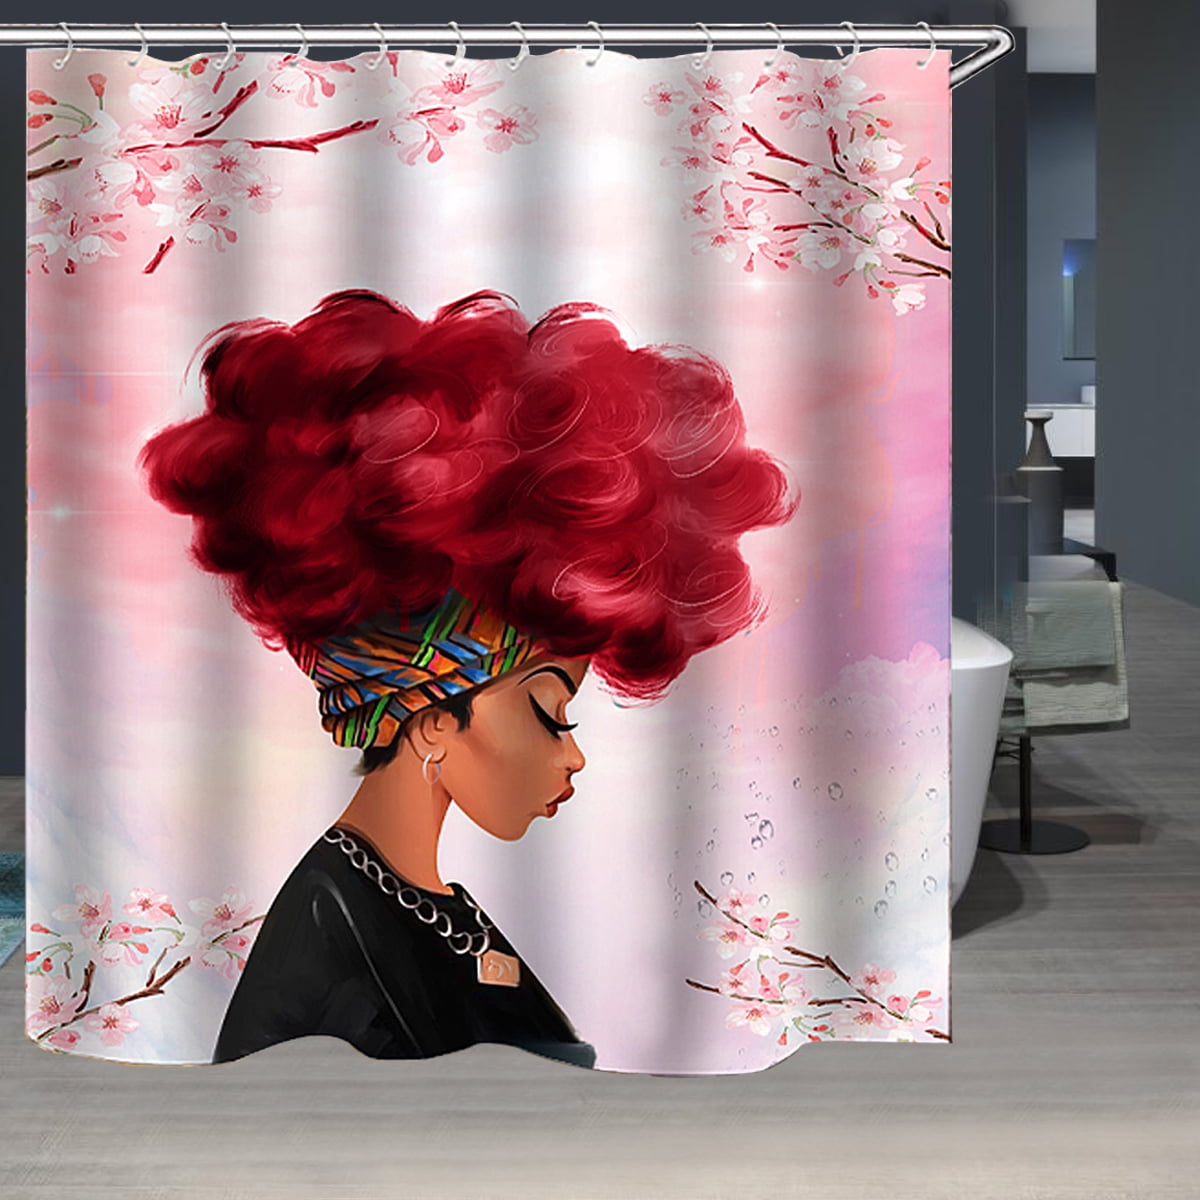 Fashion_Man 16PCS/Set African American Woman Shower Curtain Fabric Polyester Waterproof Bath Curtain Afro Girl Printing Non-Slip Bathroom Rugs Bath Mat Set Toilet Lid Cover Dog 72x72 Cool Girl